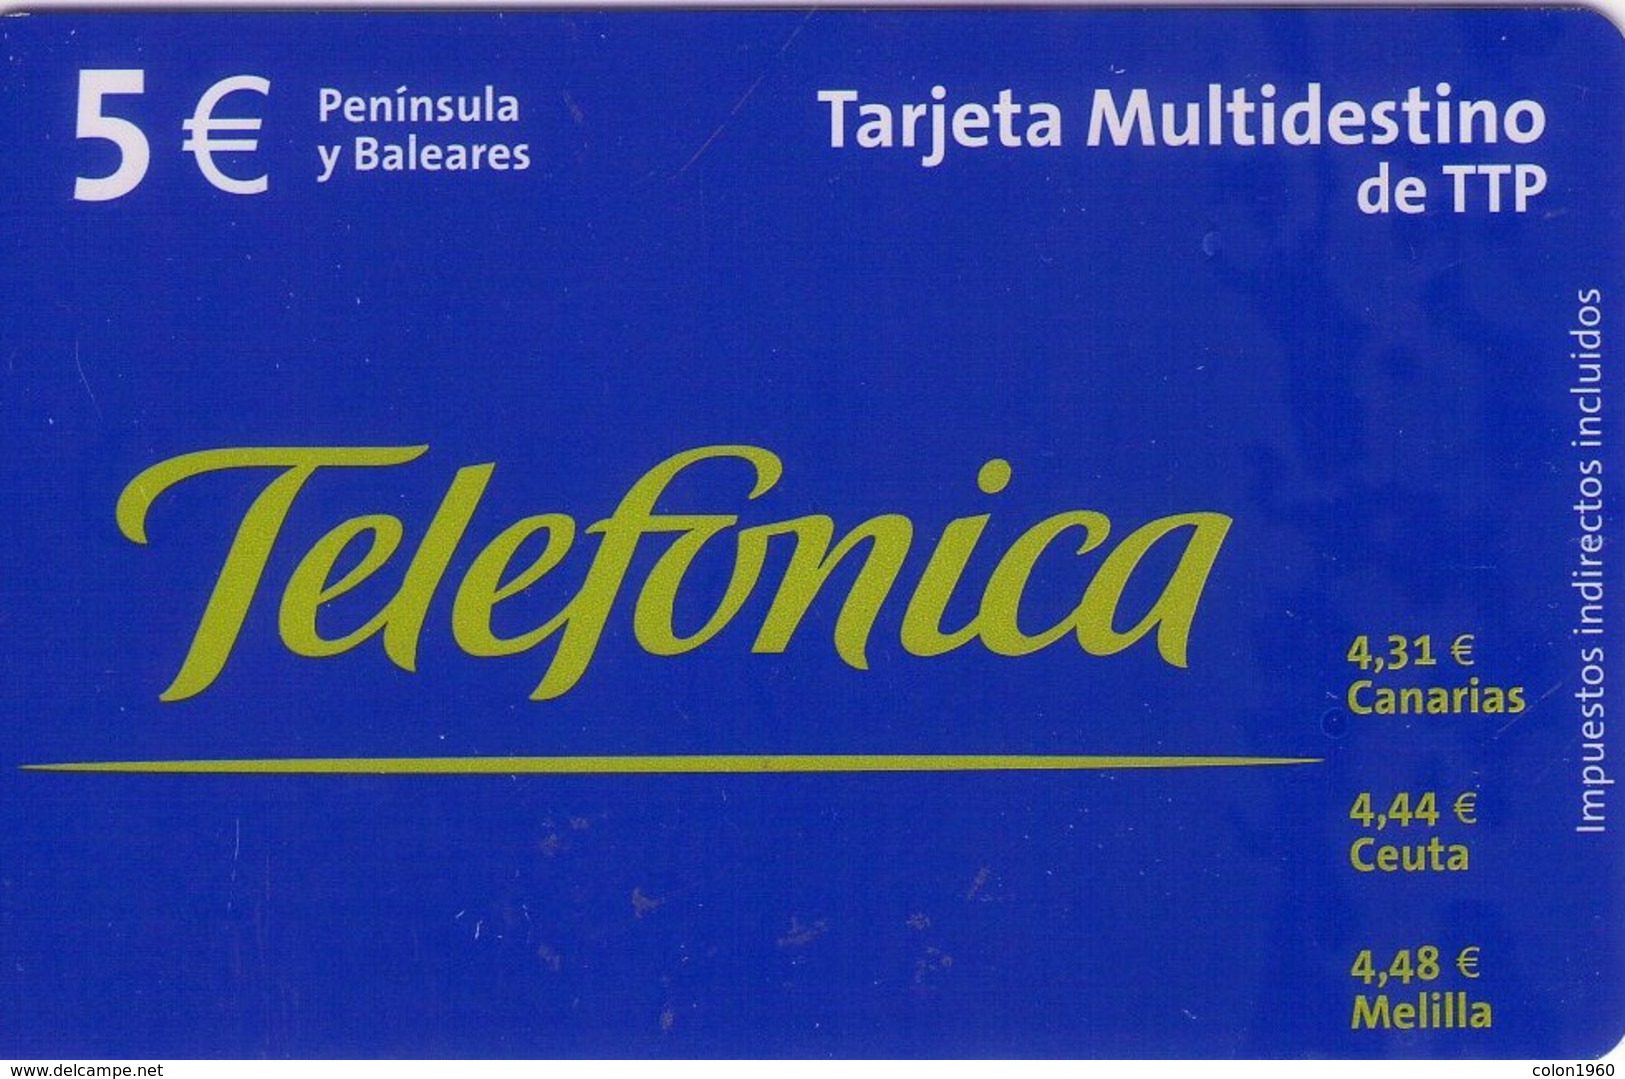 ESPAÑA. PRE-TEA-0019. TELEFONICA TARJETA MULTIDESTINO DE TTP. 5€. 06-2004. (428P) - Telefonica